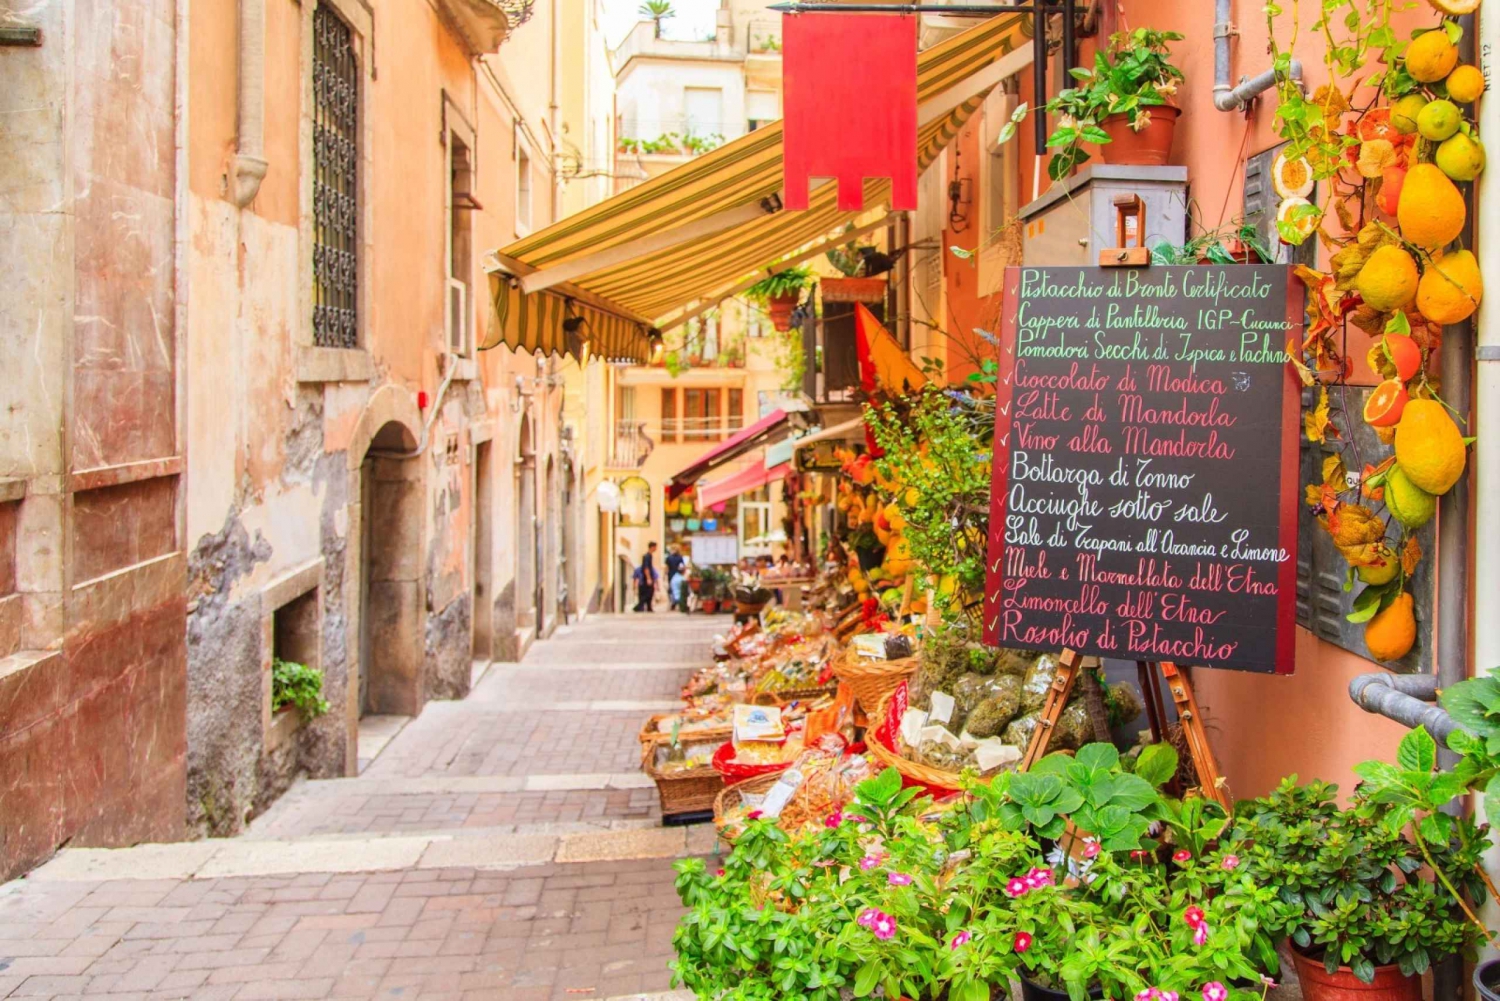 2-Hour Private Taormina Guided Tour